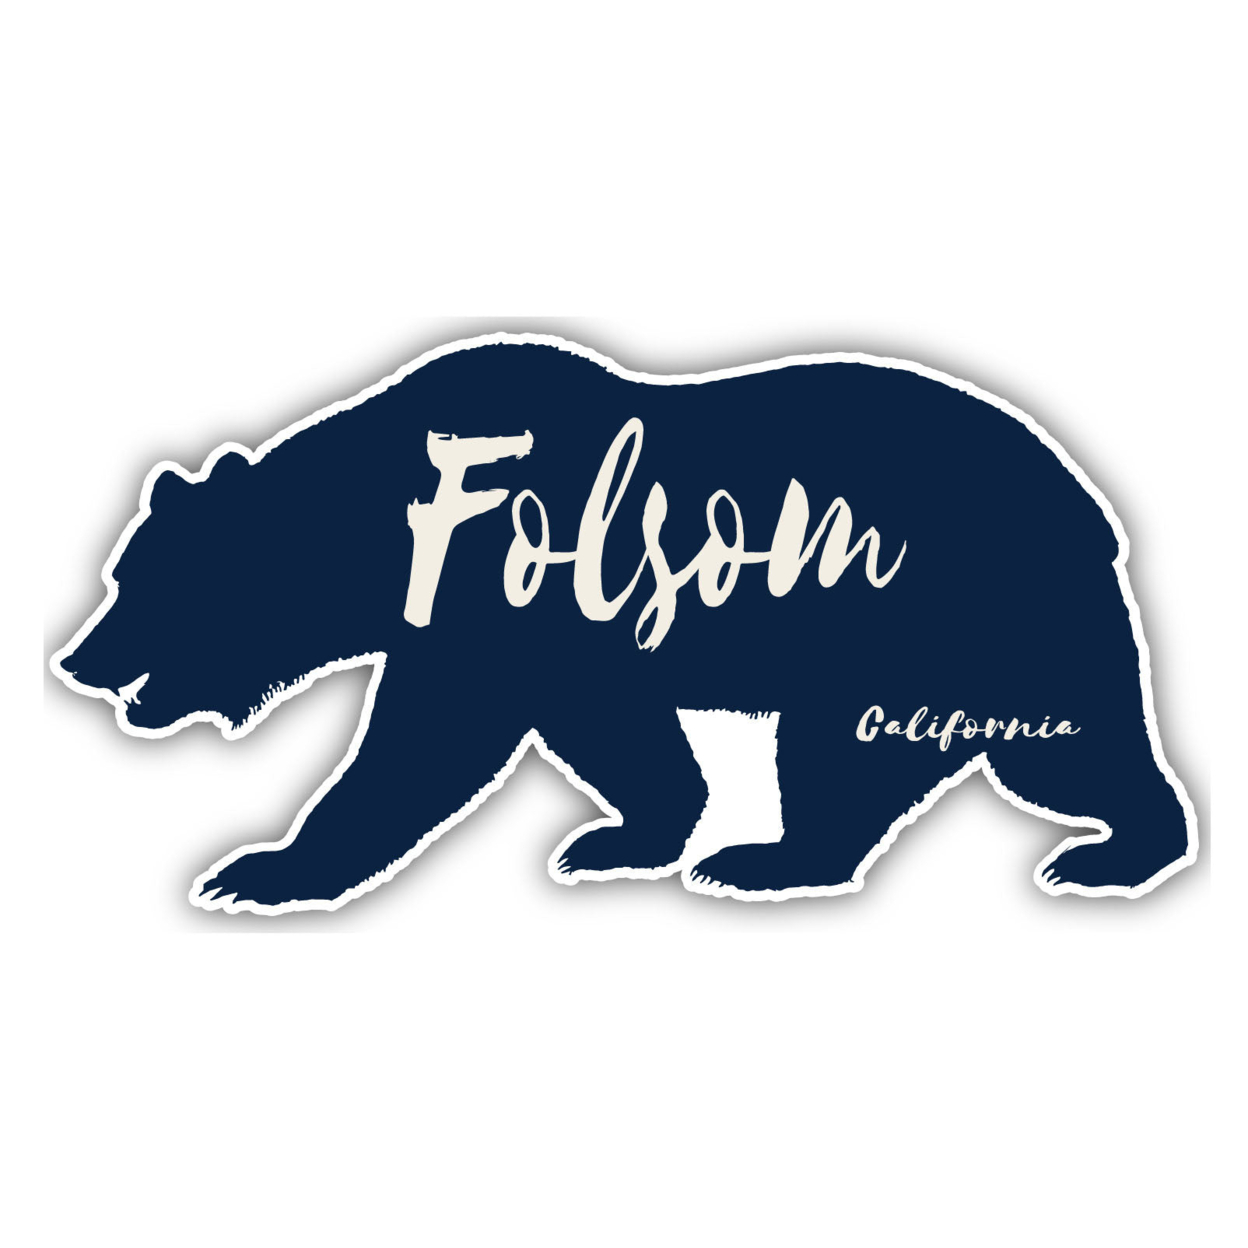 Folsom California Souvenir Decorative Stickers (Choose Theme And Size) - Single Unit, 8-Inch, Tent